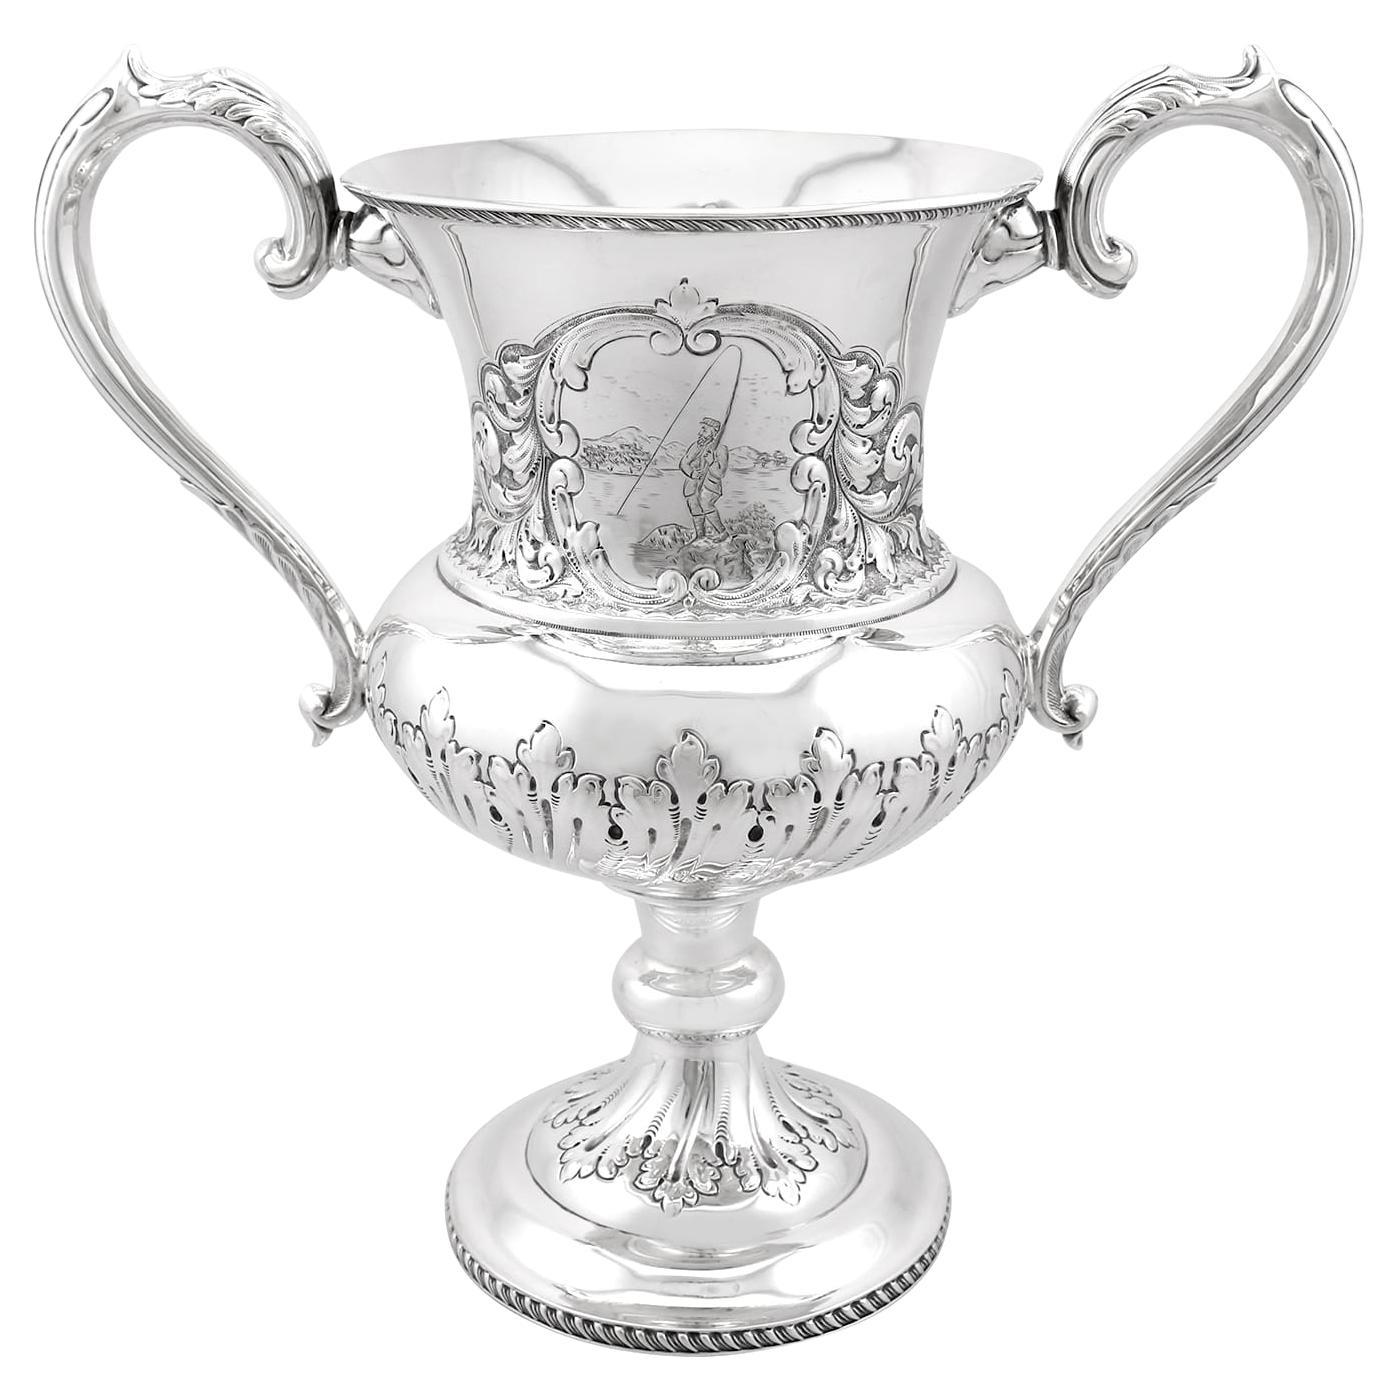 Antique Edwardian Sterling Silver Presentation Cup For Sale